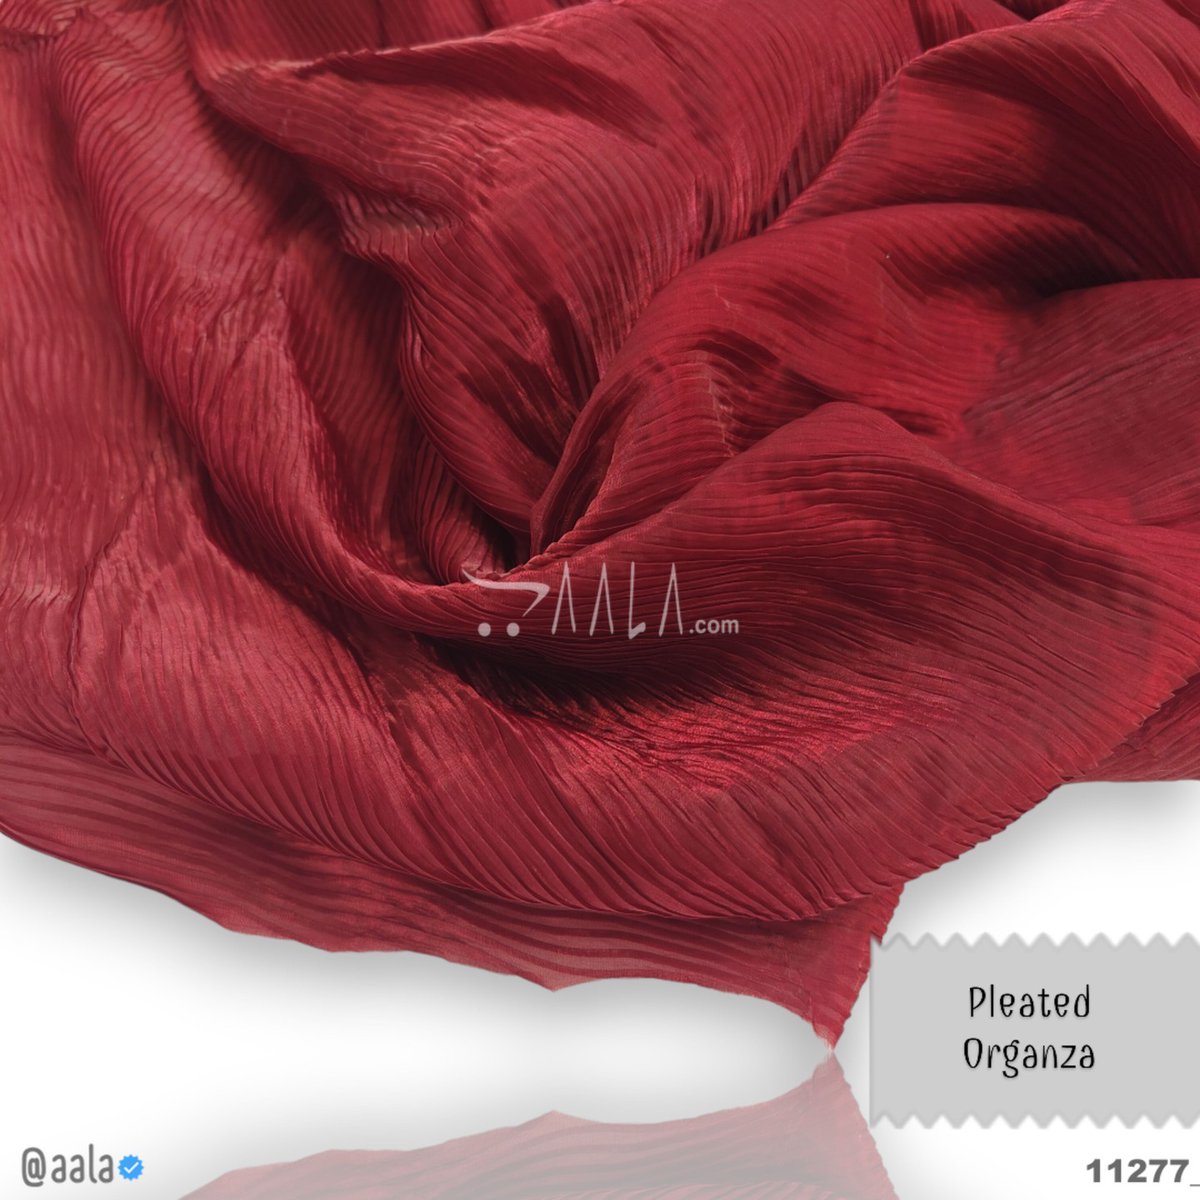 Pleated Organza Fabrics at aala.com #aala #onlinefabrics #fashionfabrics #fashiondesigners #bride #loveaala #fashionstyle #fashiondesigner #loveaala Buy Online at aala.com/p/11277